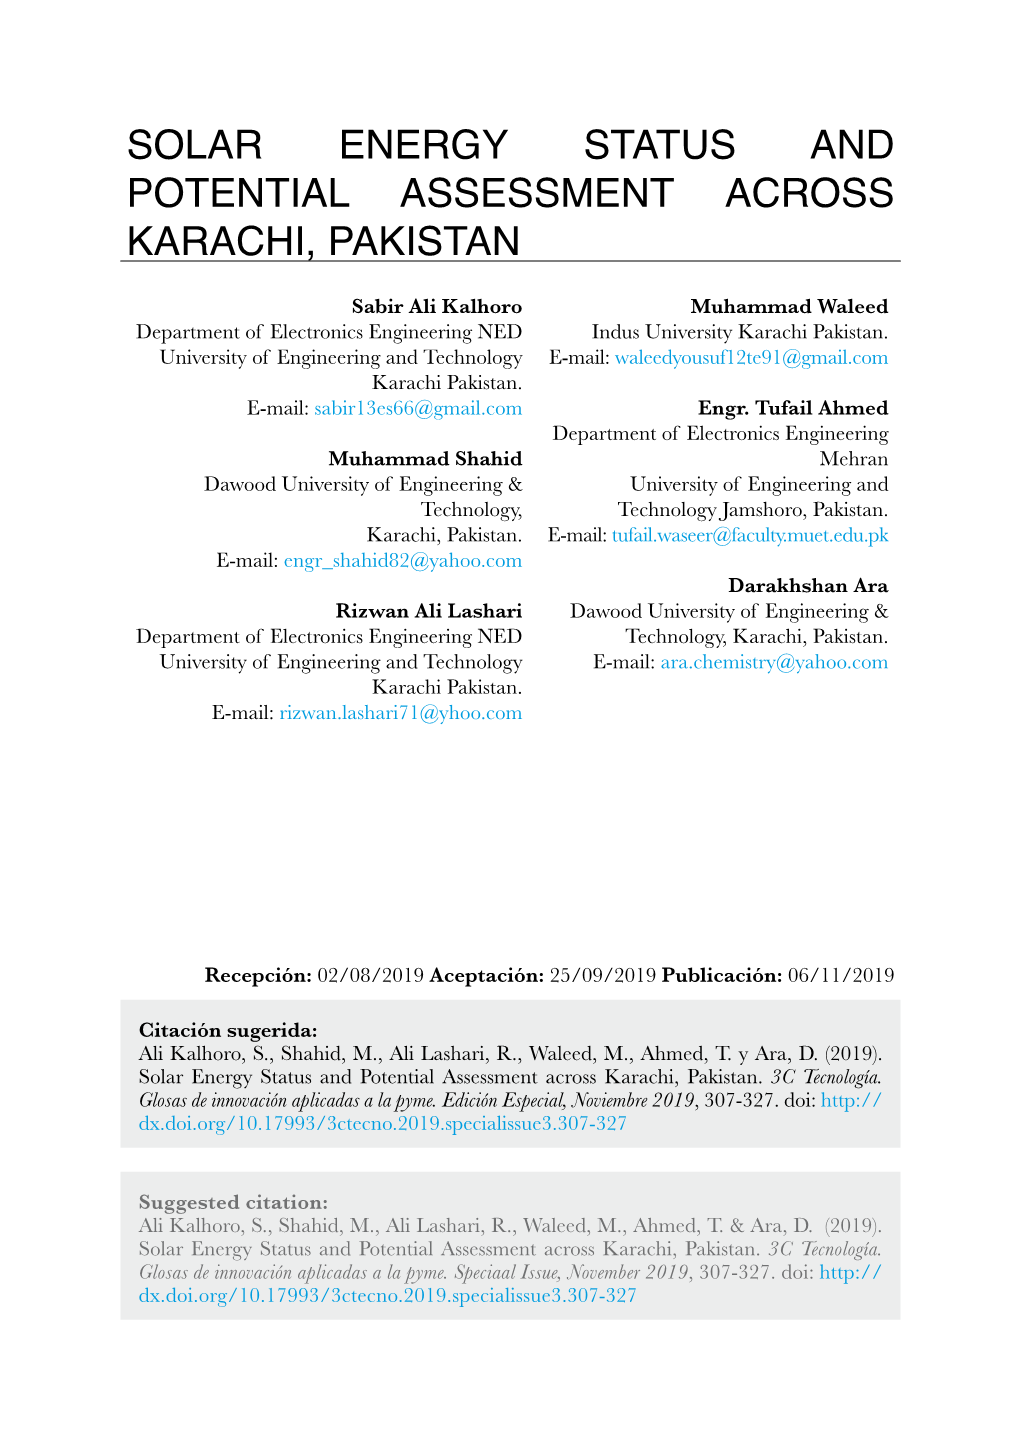 Solar Energy Status and Potential Assessment Across Karachi, Pakistan